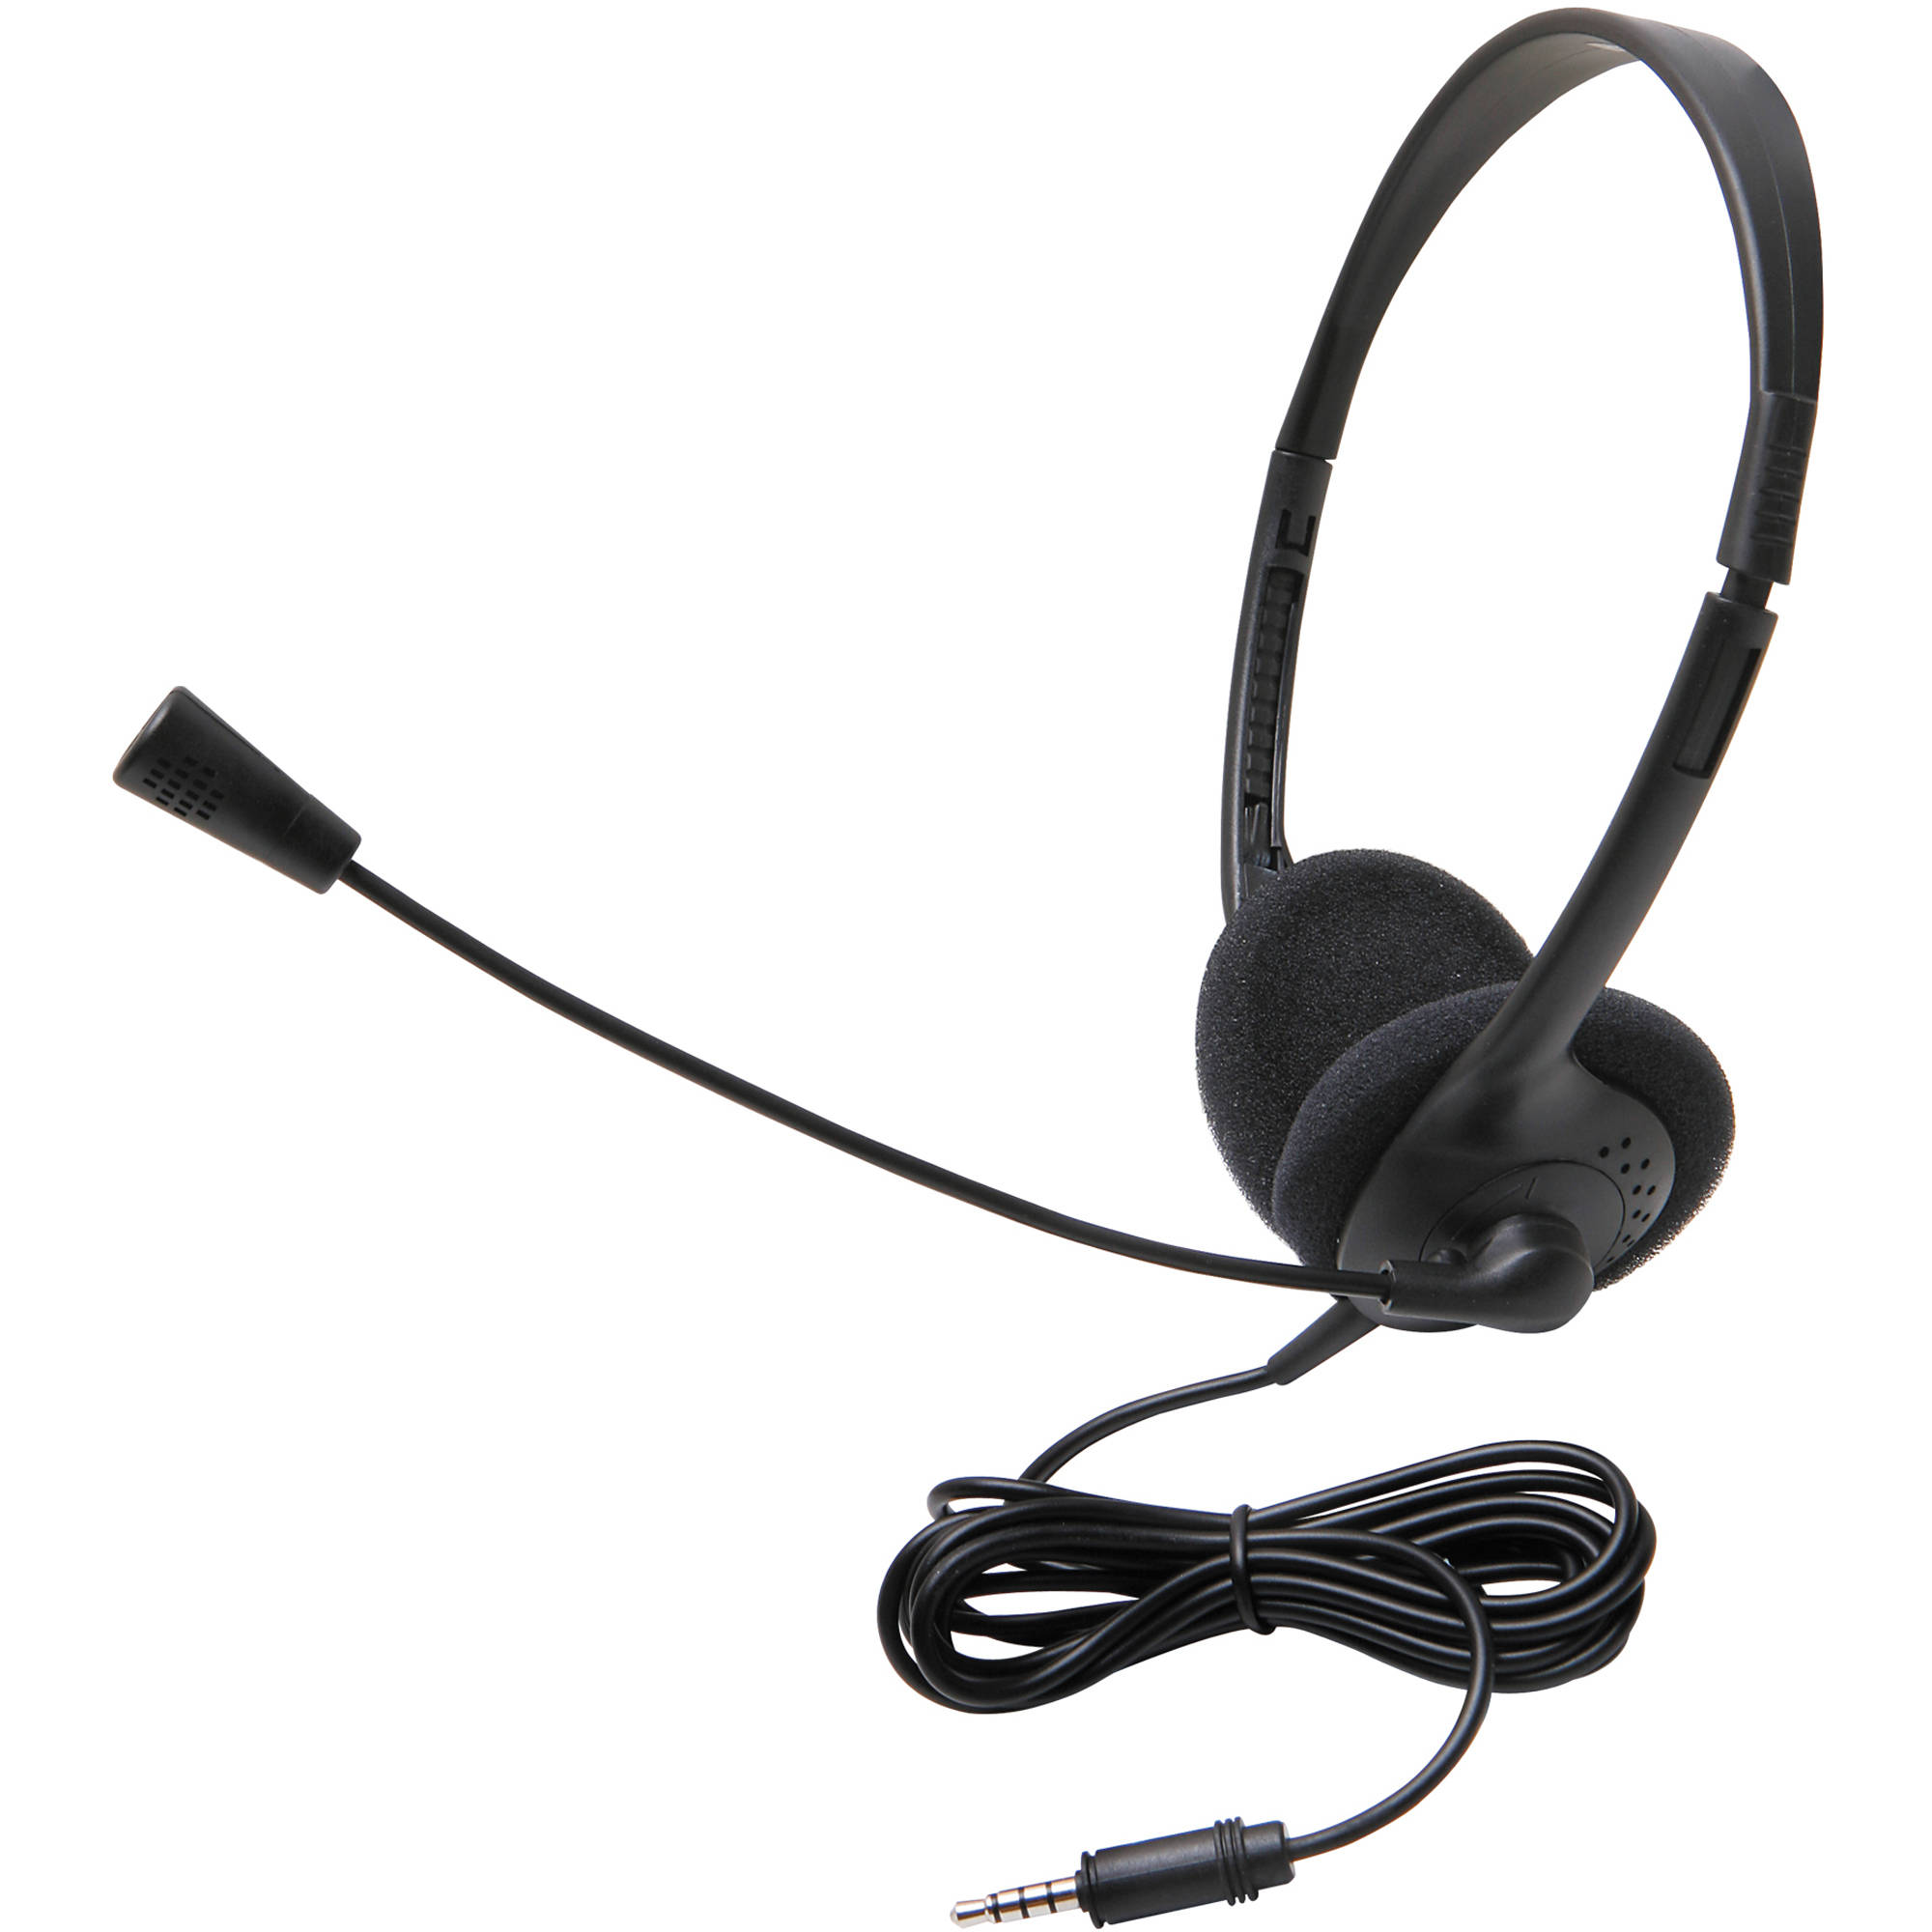 multimedia headset